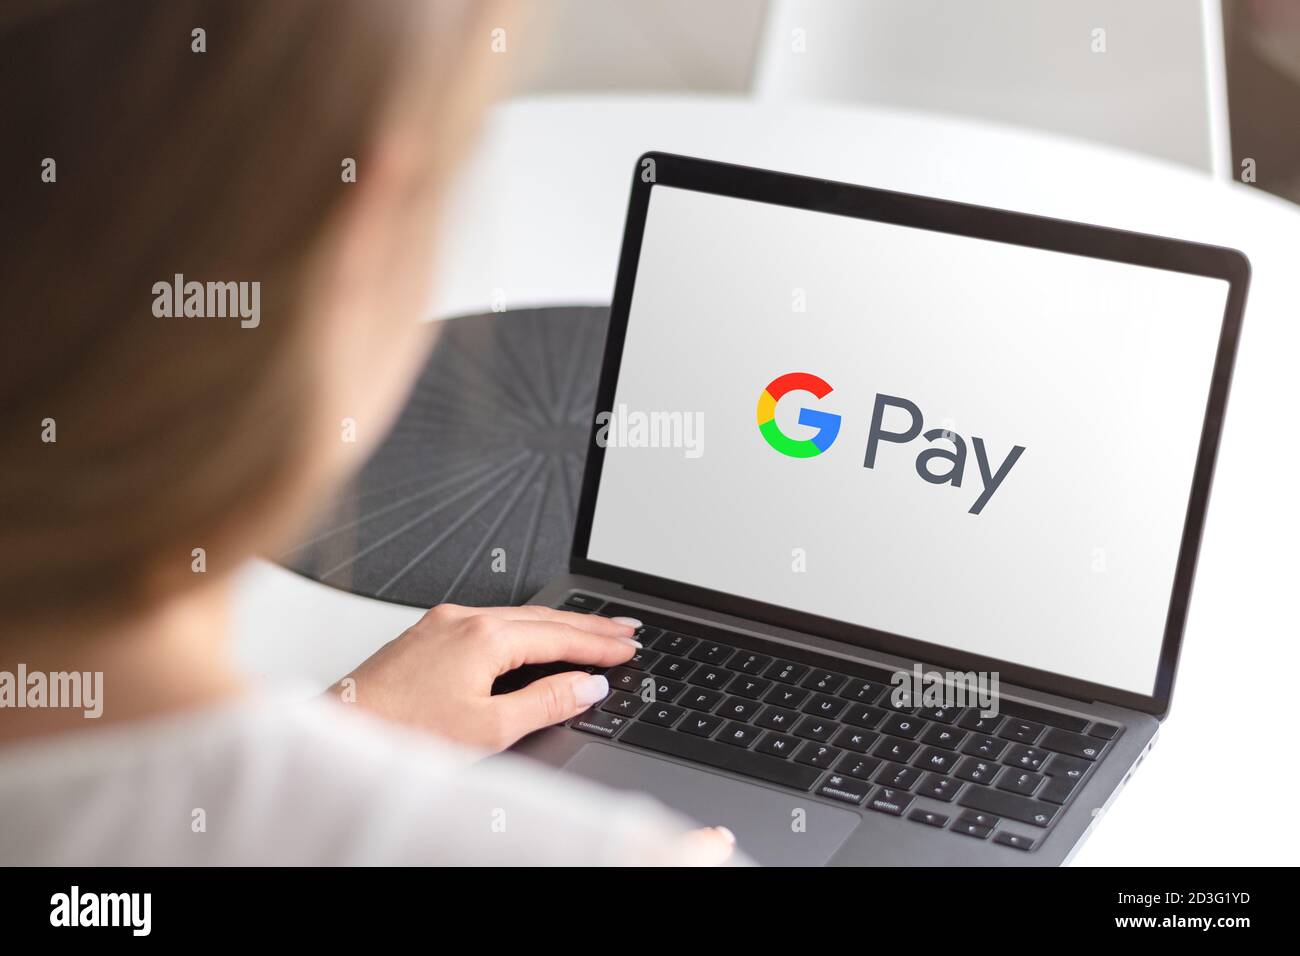 Guilherand-Granges, France - October 08, 2020. Smartphone with Google Pay logo. Digital wallet platform and online payment system. Stock Photo